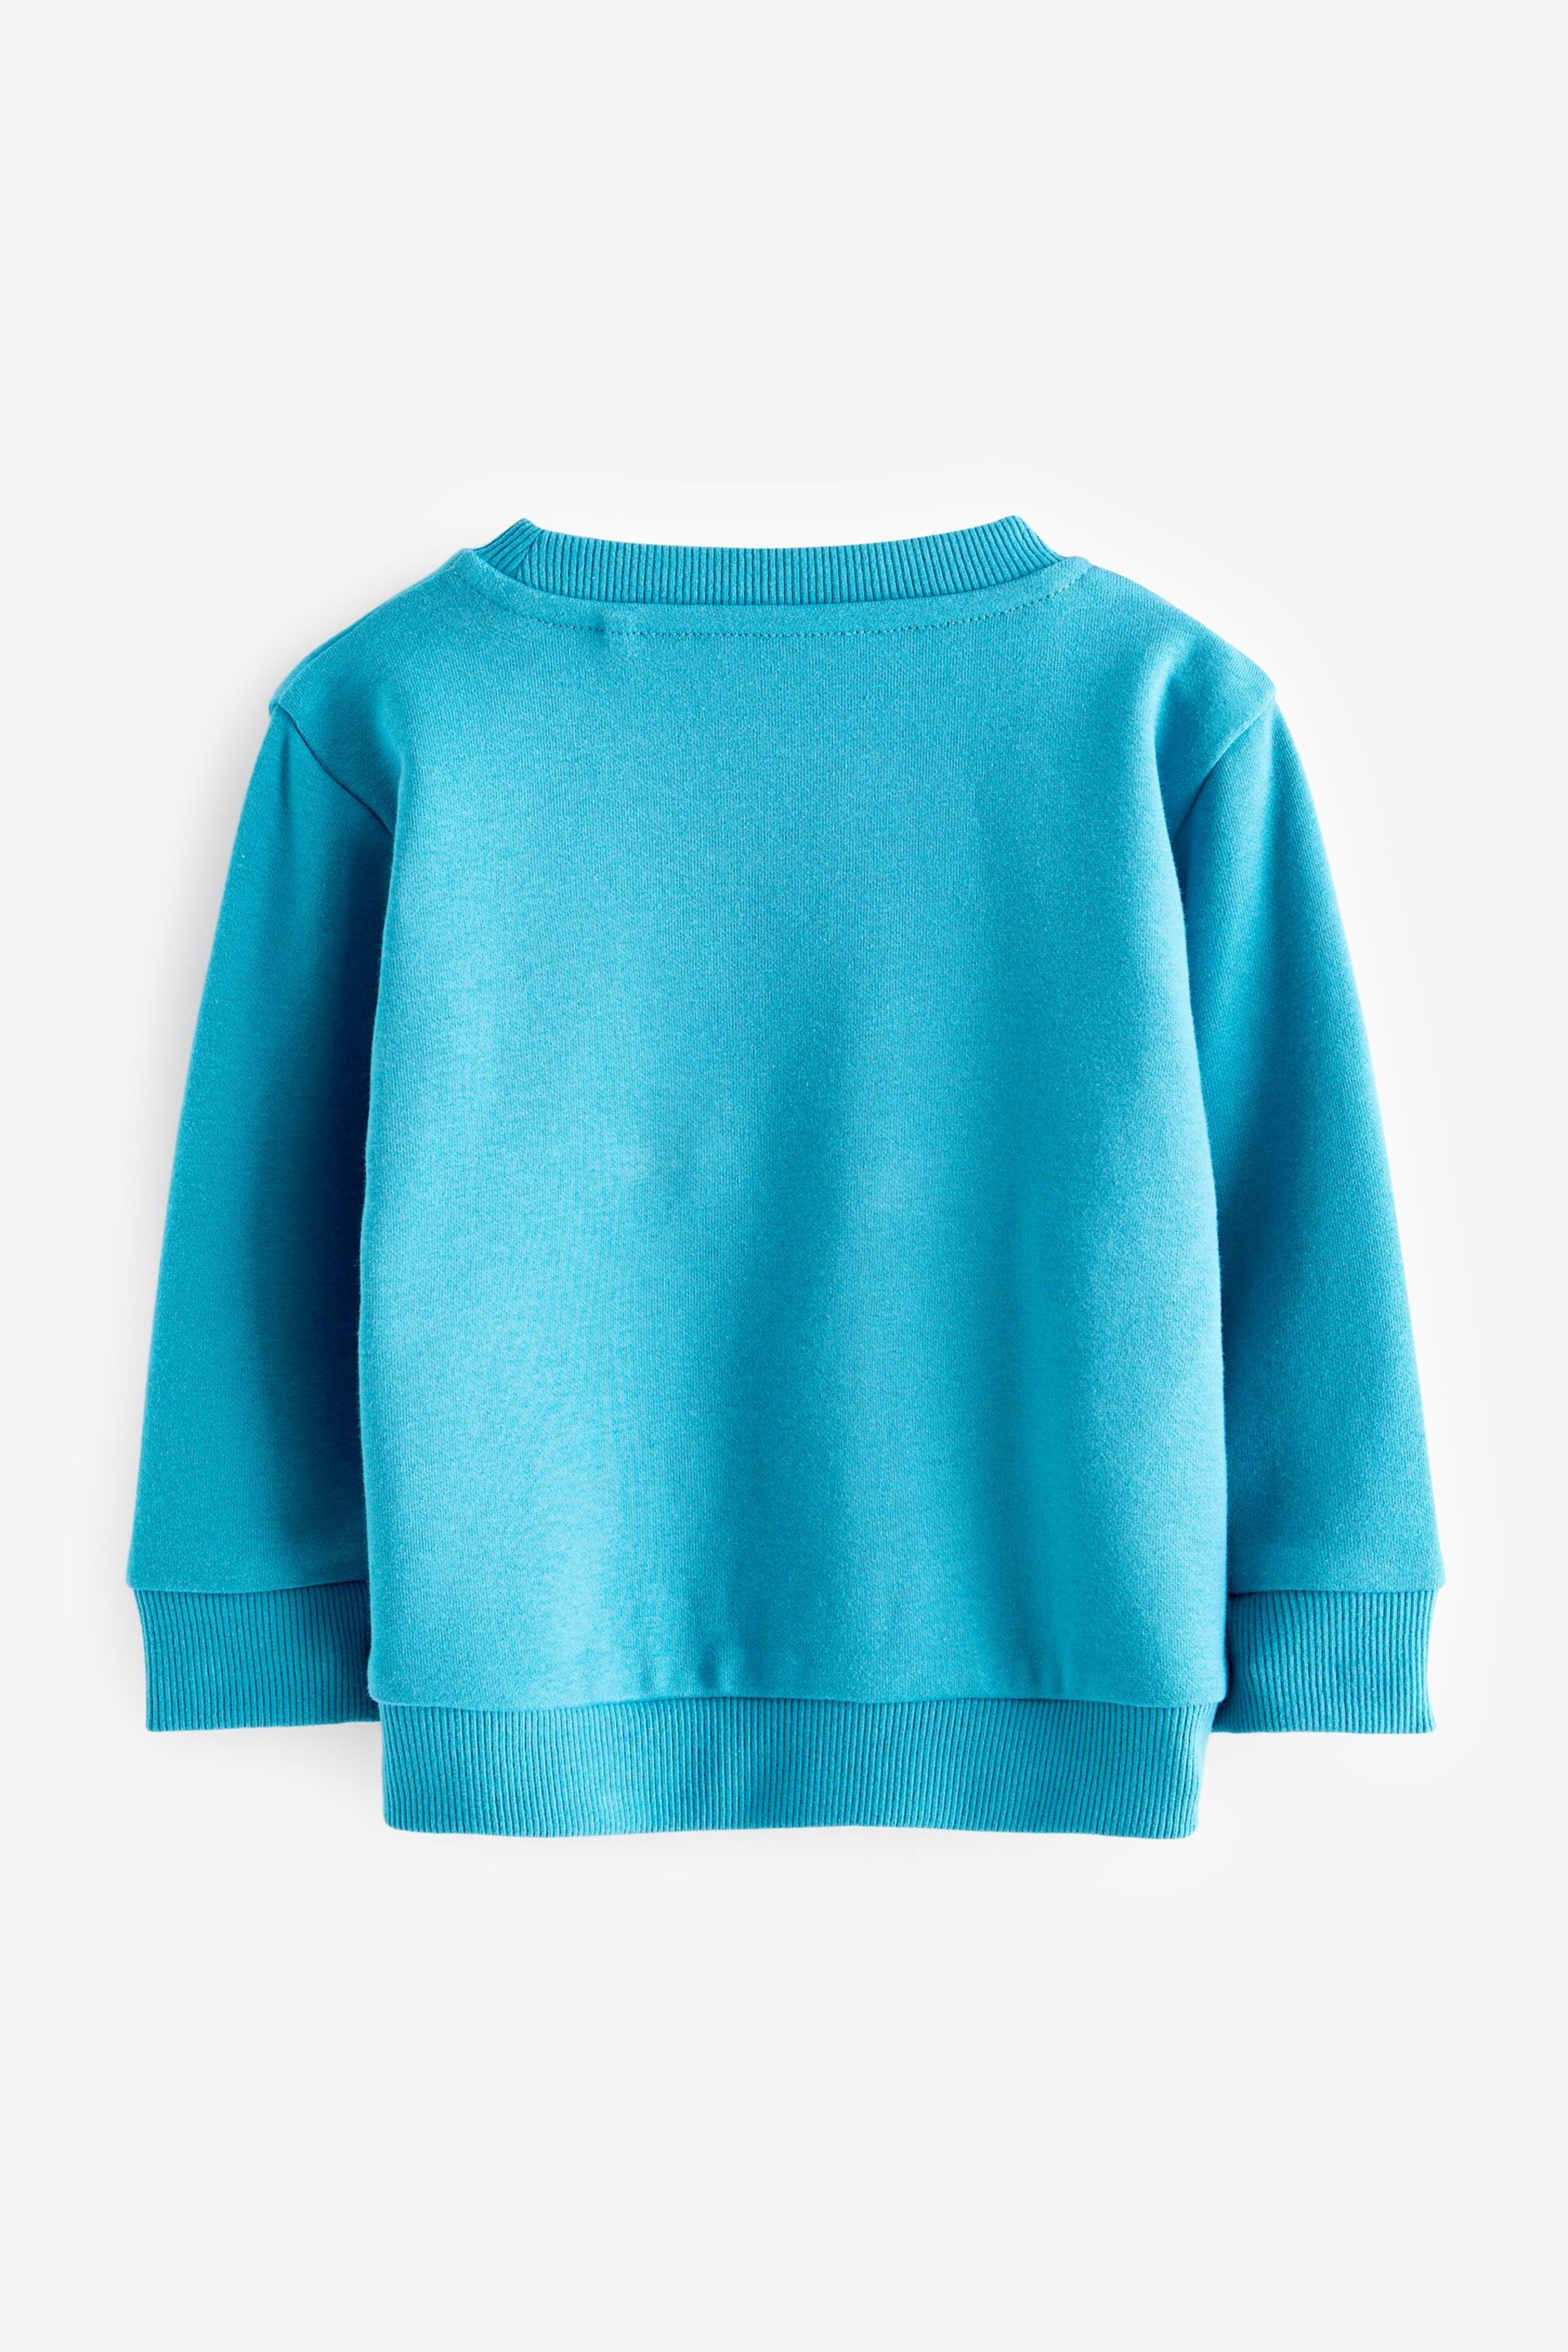 Blue Sesame Street Sweatshirt (6mths-8yrs) - Image 2 of 3